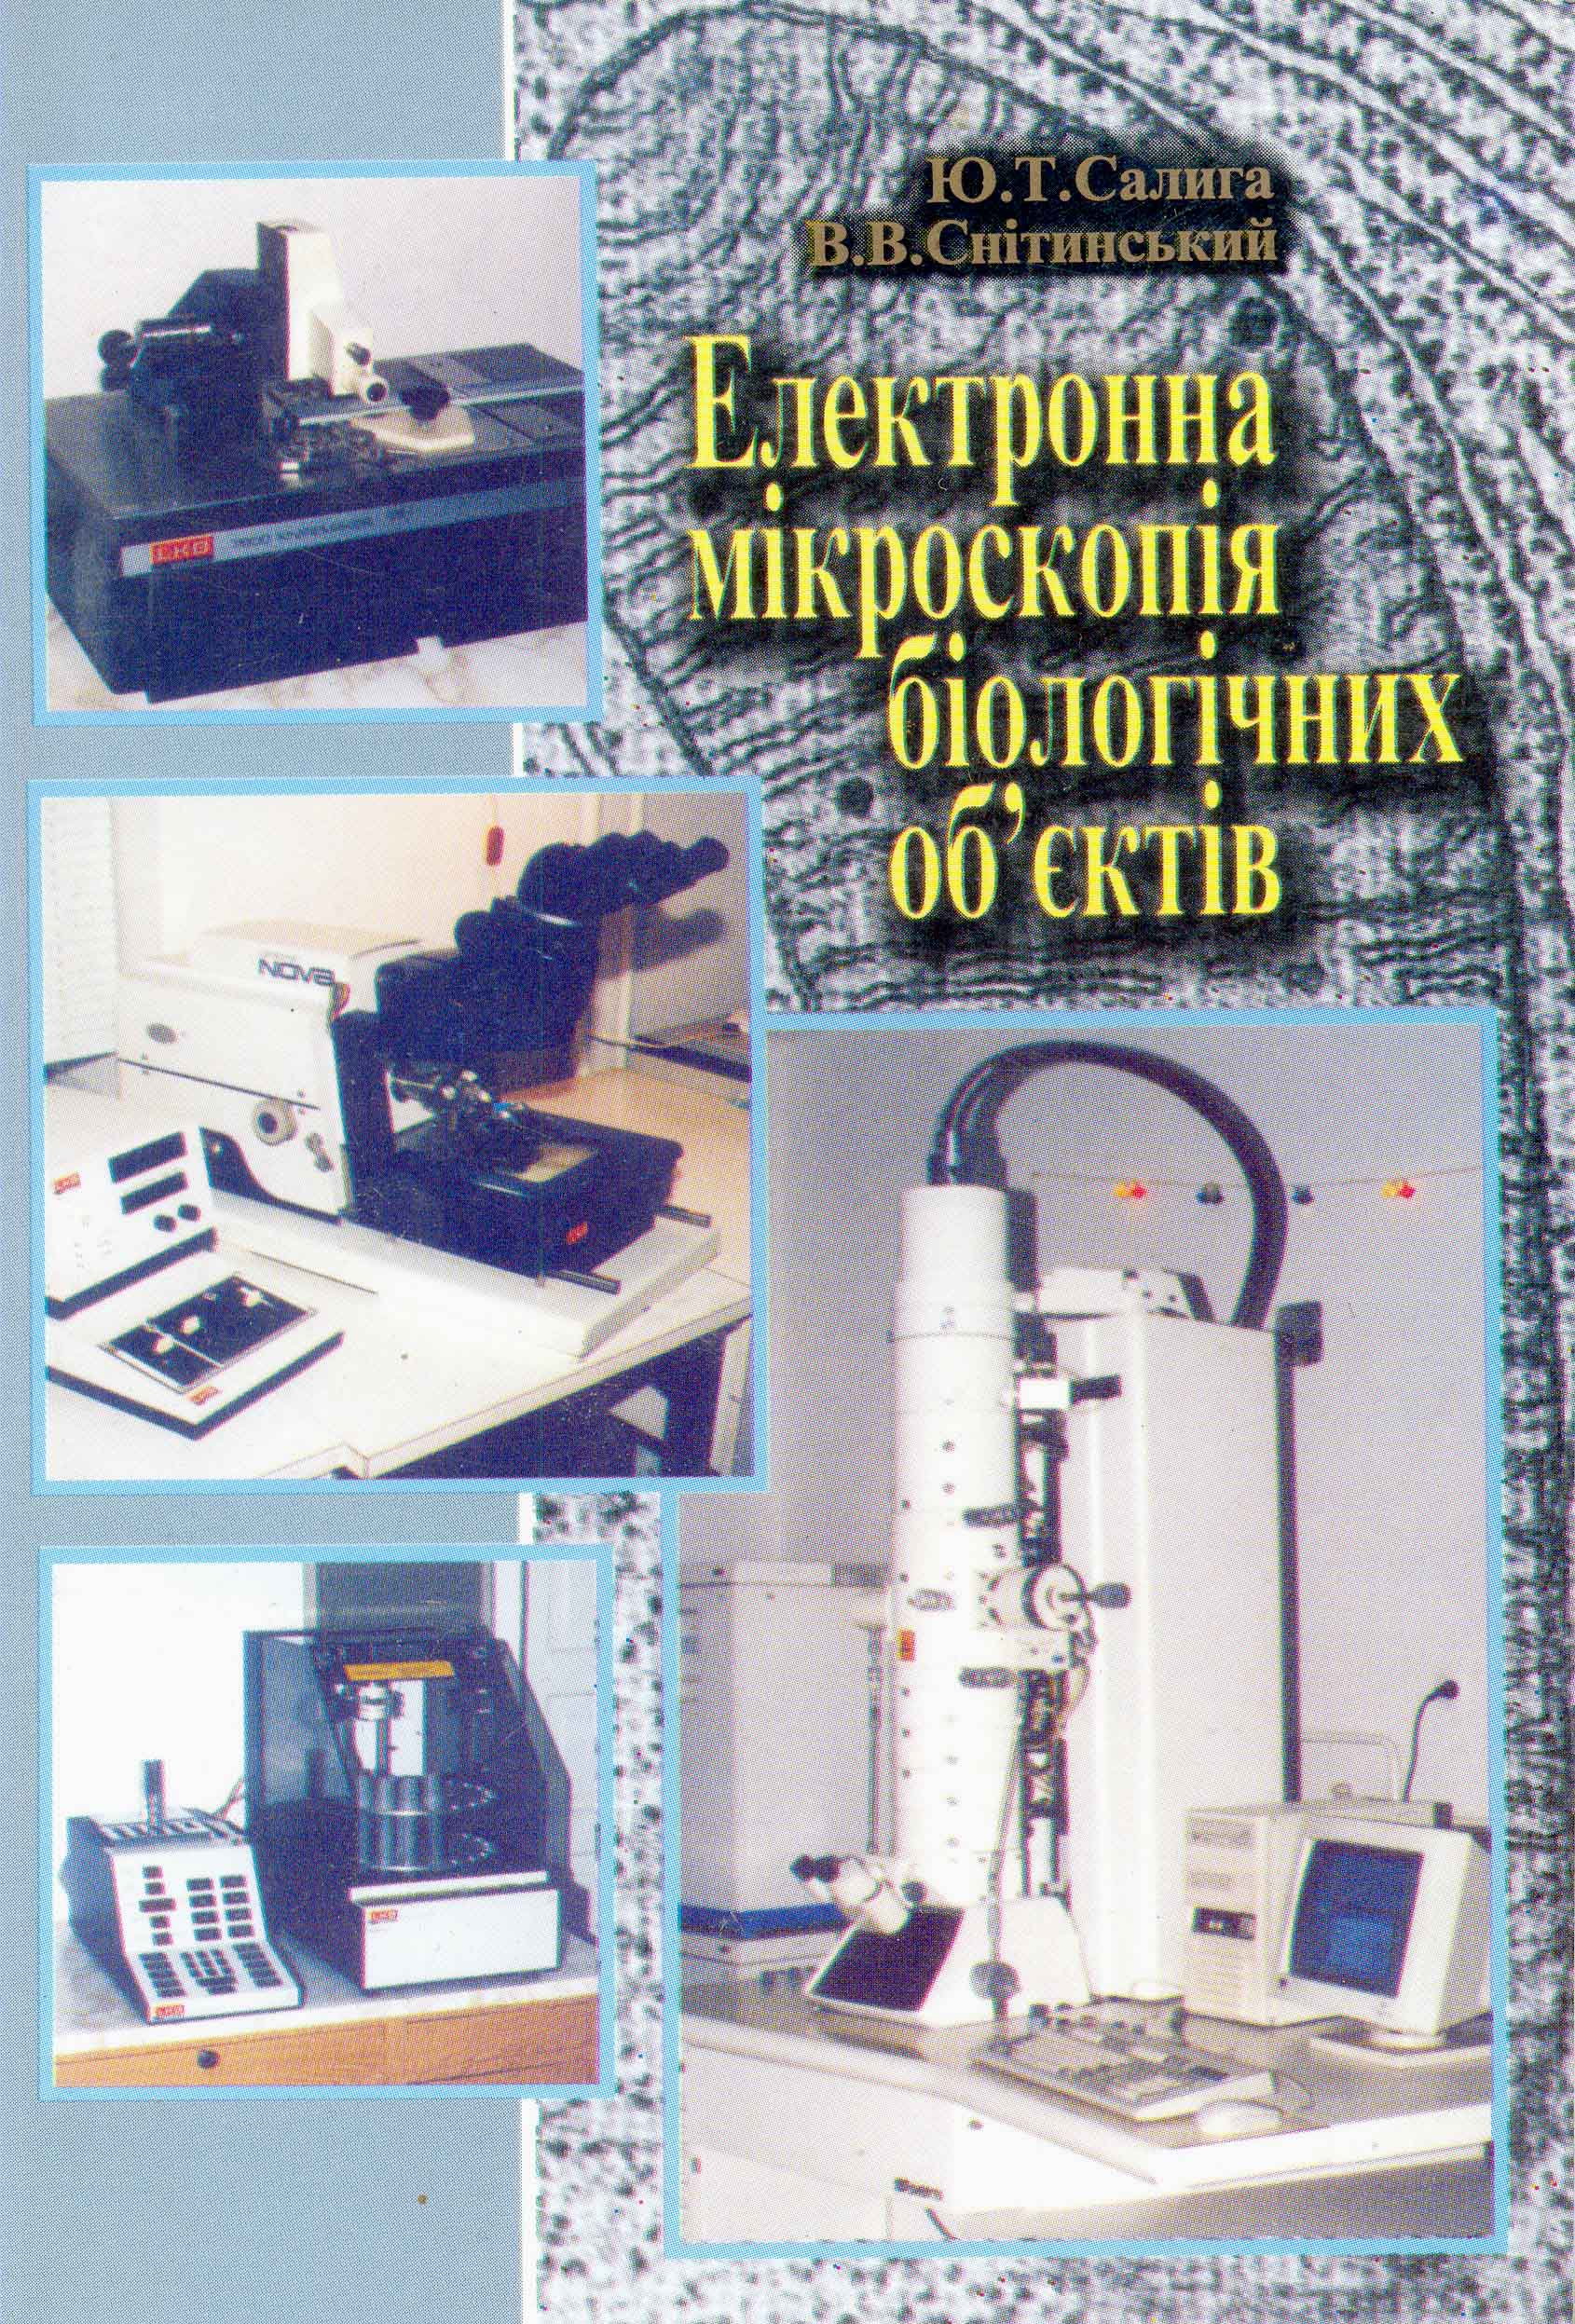 Electronmicroscop1999